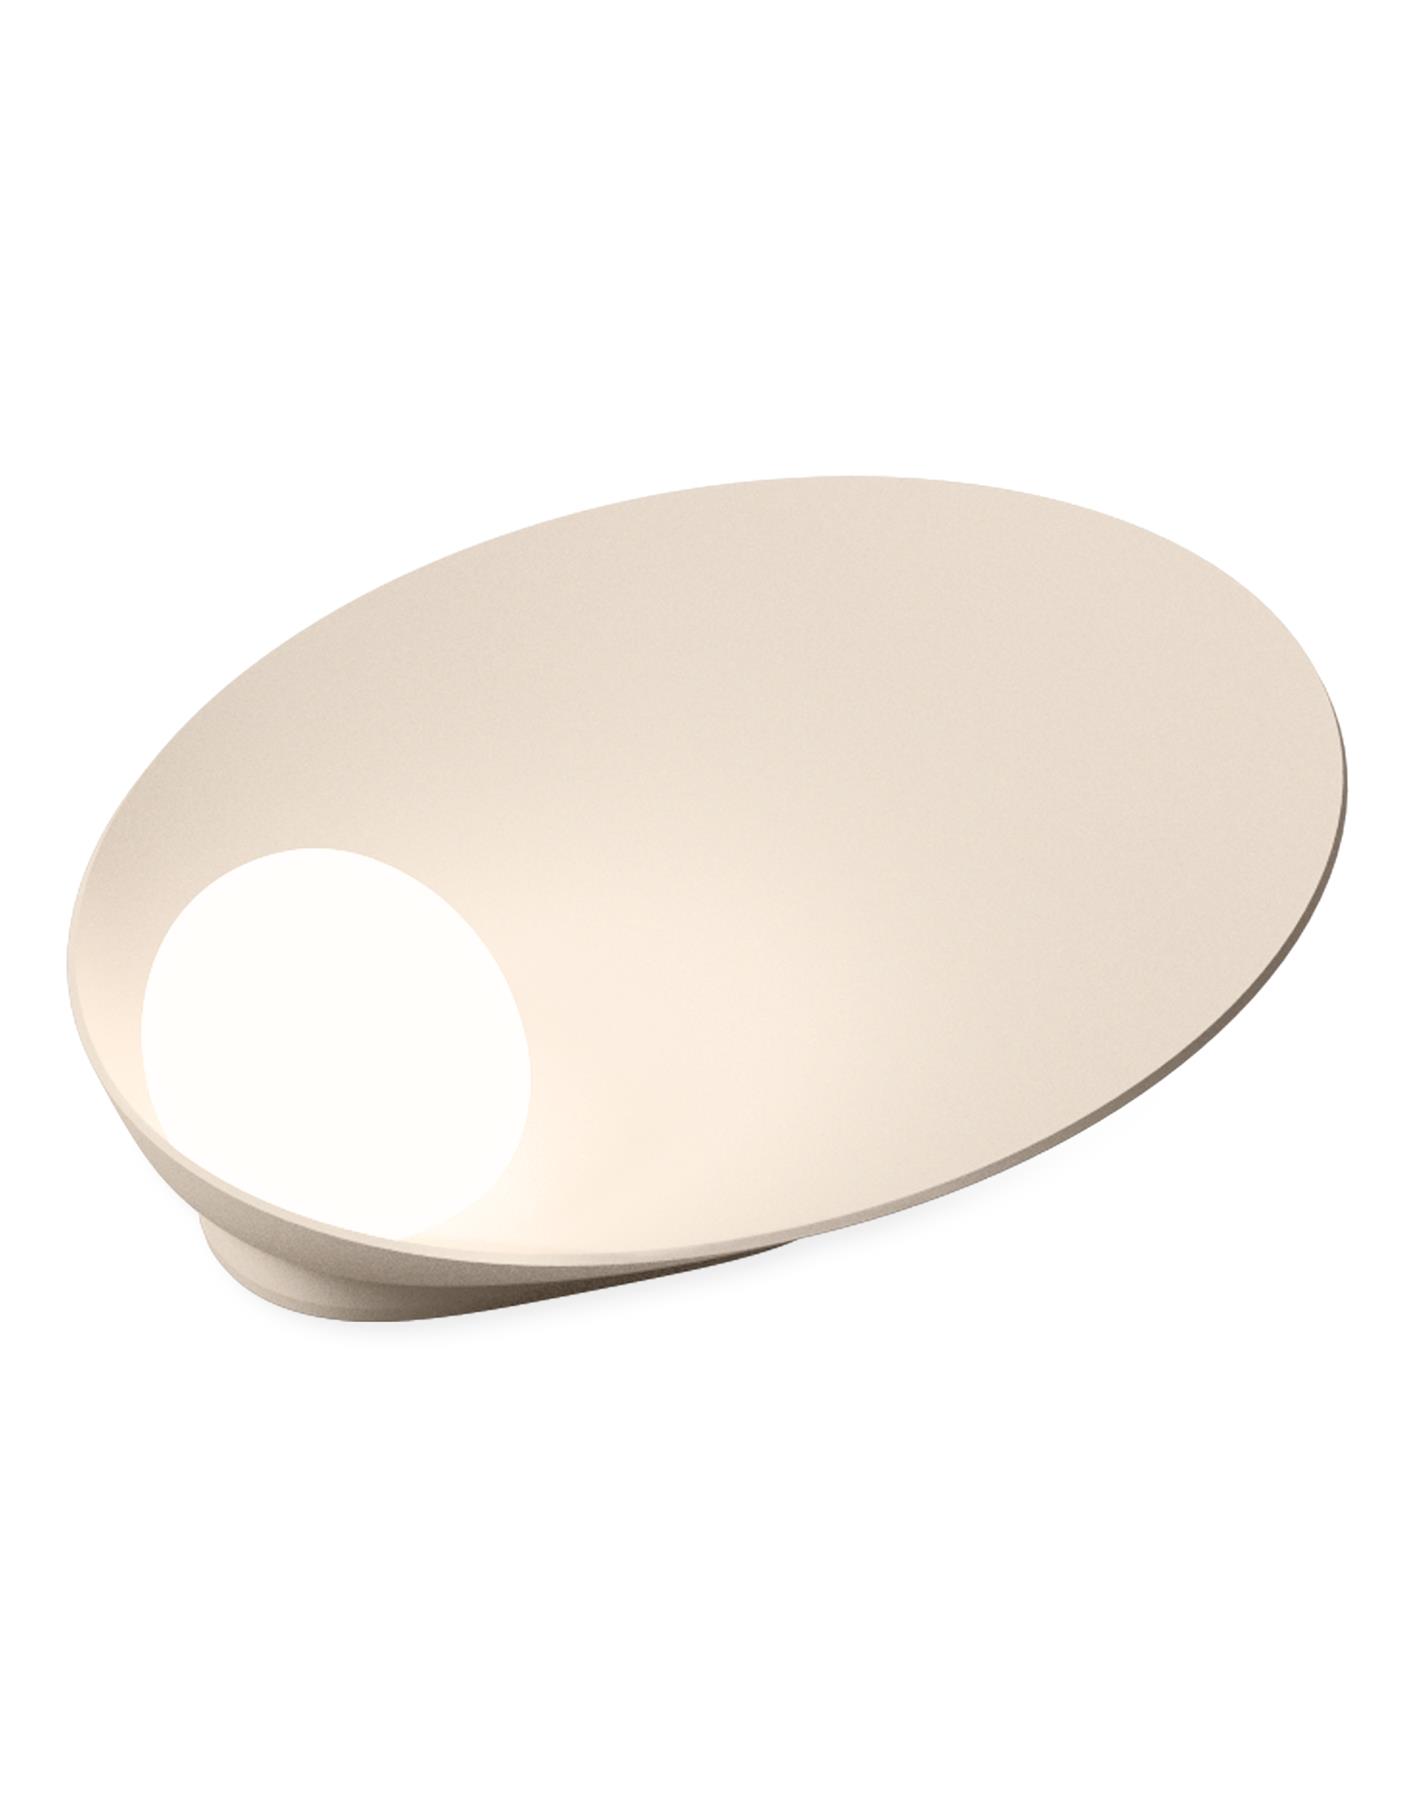 Musa Table Light 7404 Portable White